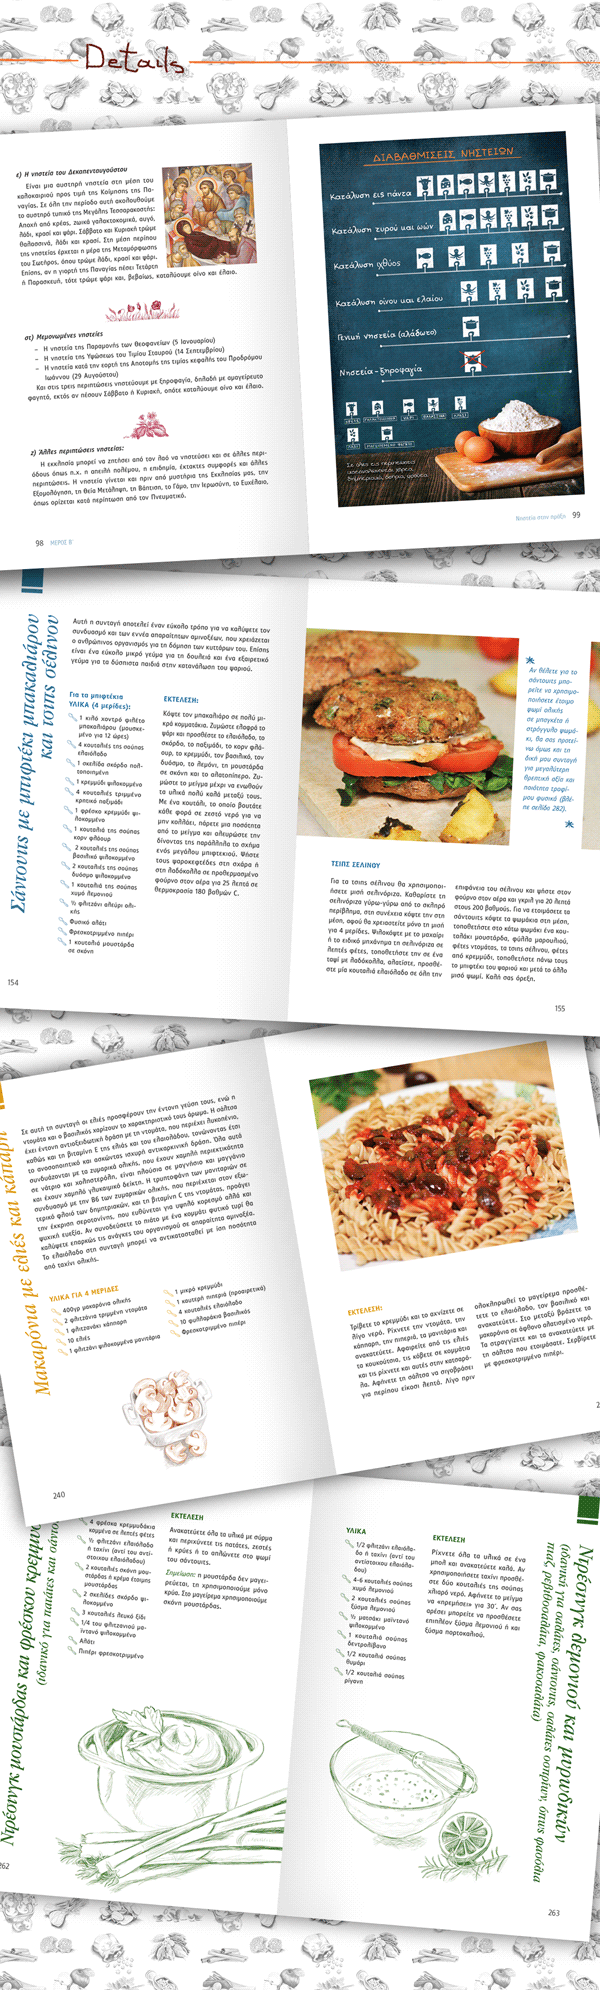 fasting diet book stamoulis karakasidou giota Food 